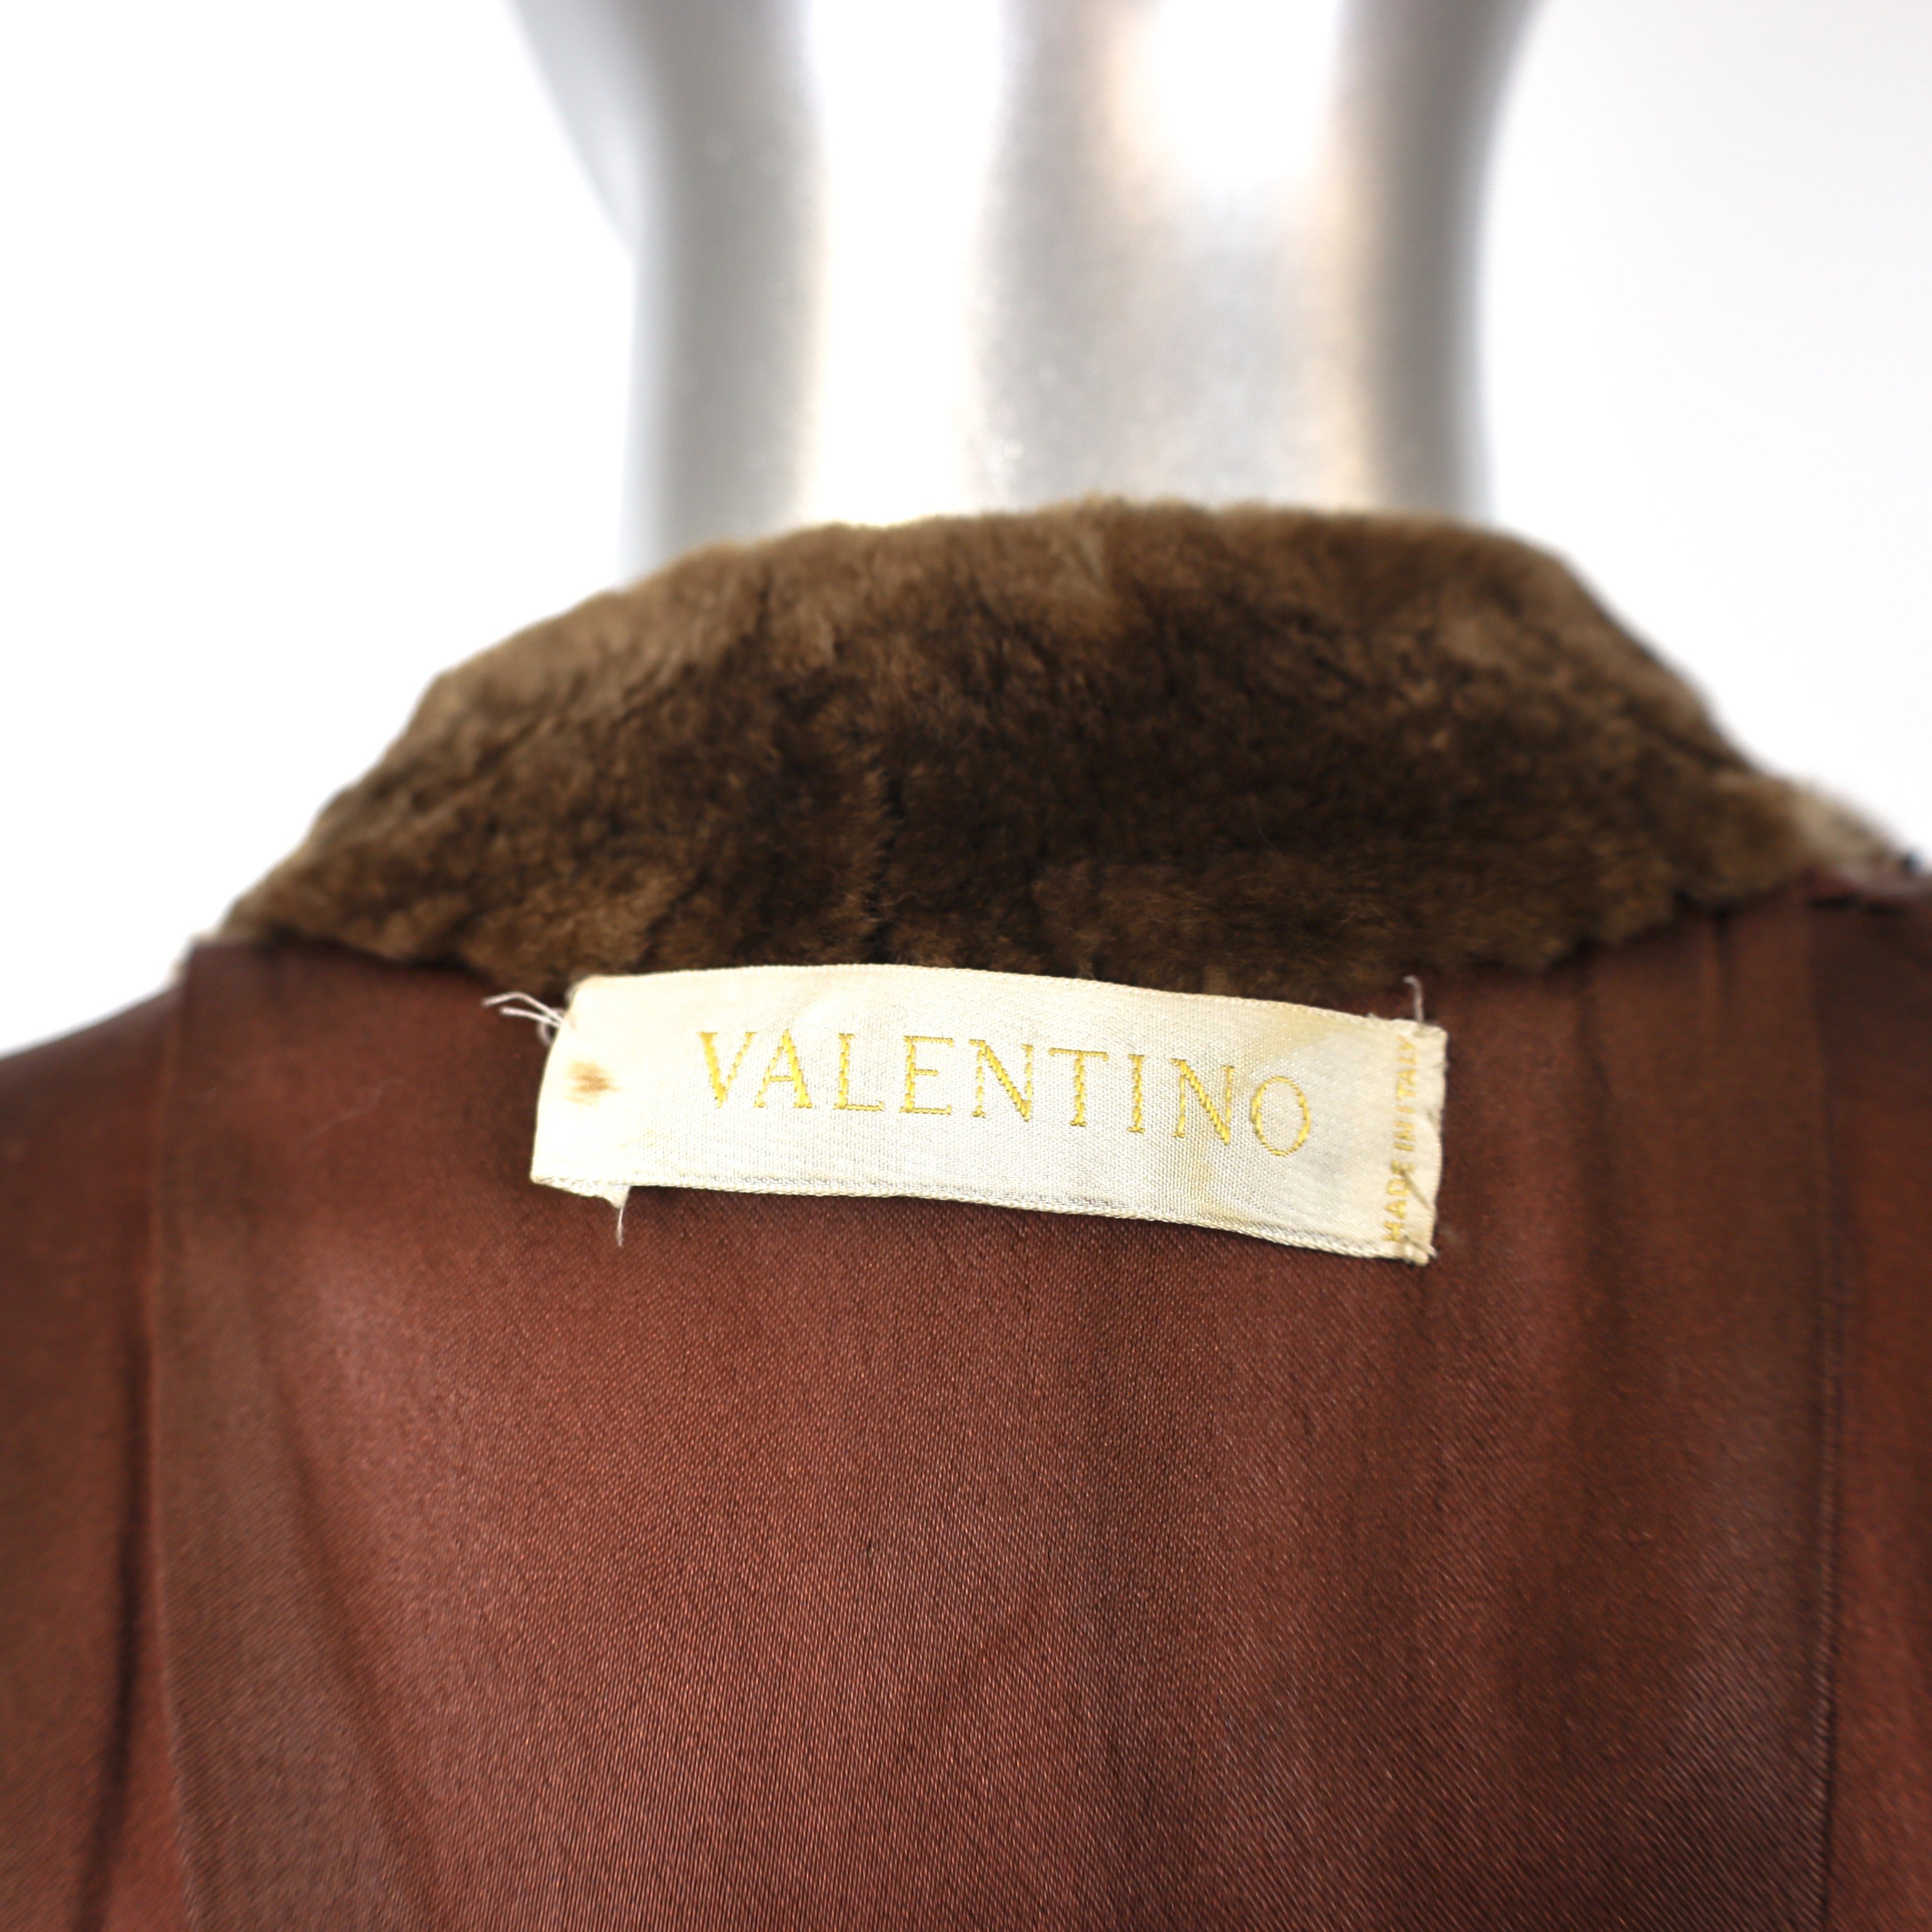 LOUIS VUITTON fur coat, size 36. Orange-red rabbit fur w…